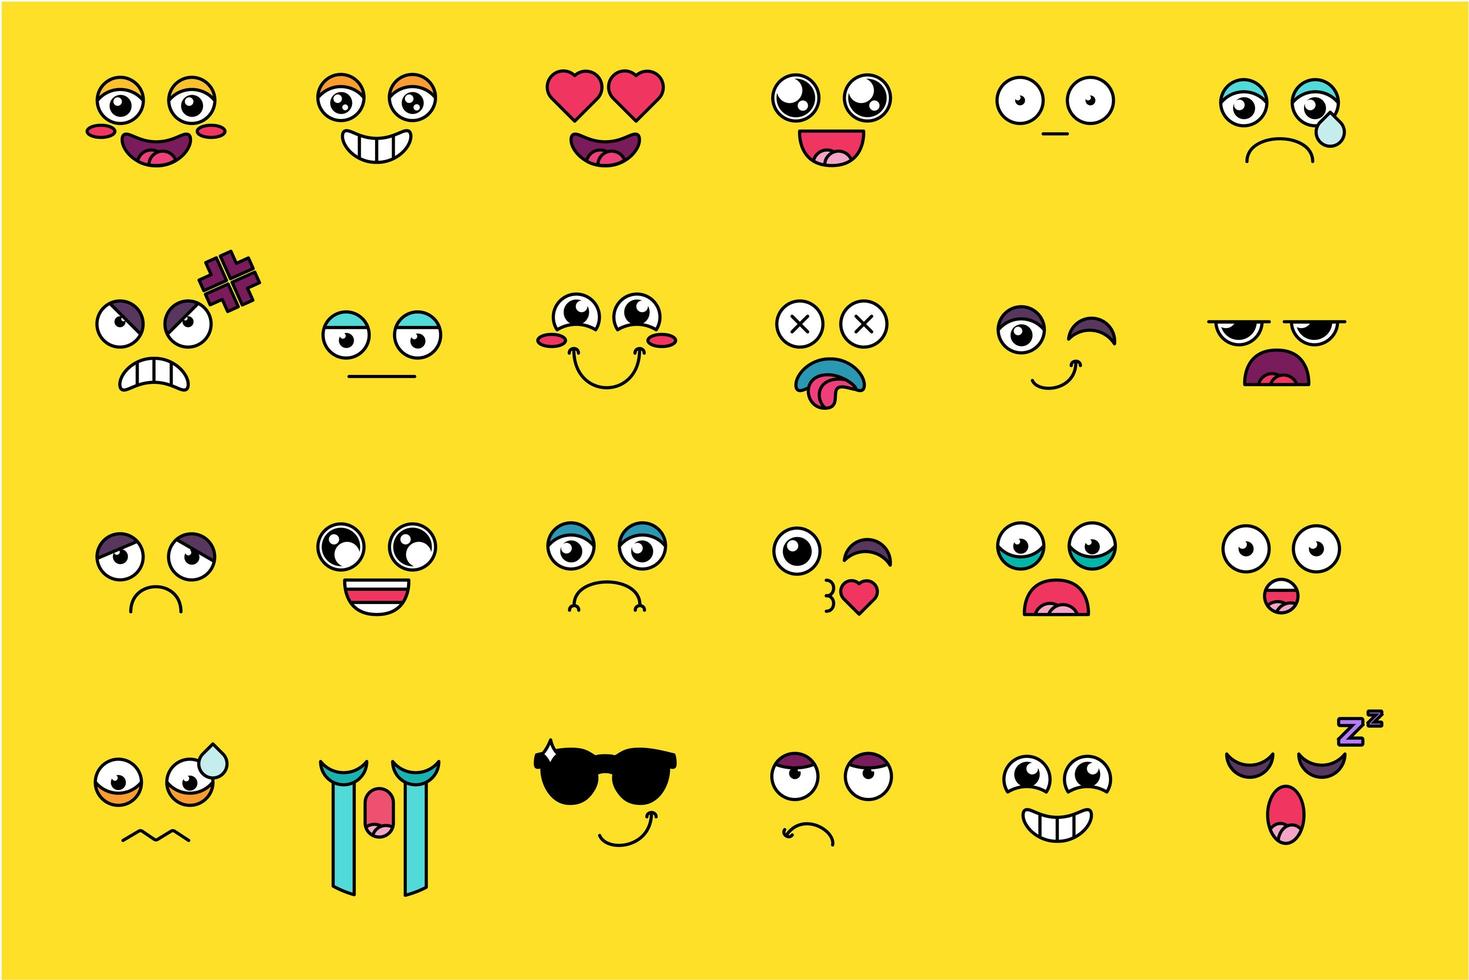 Funny, cute emoji sticker set vector